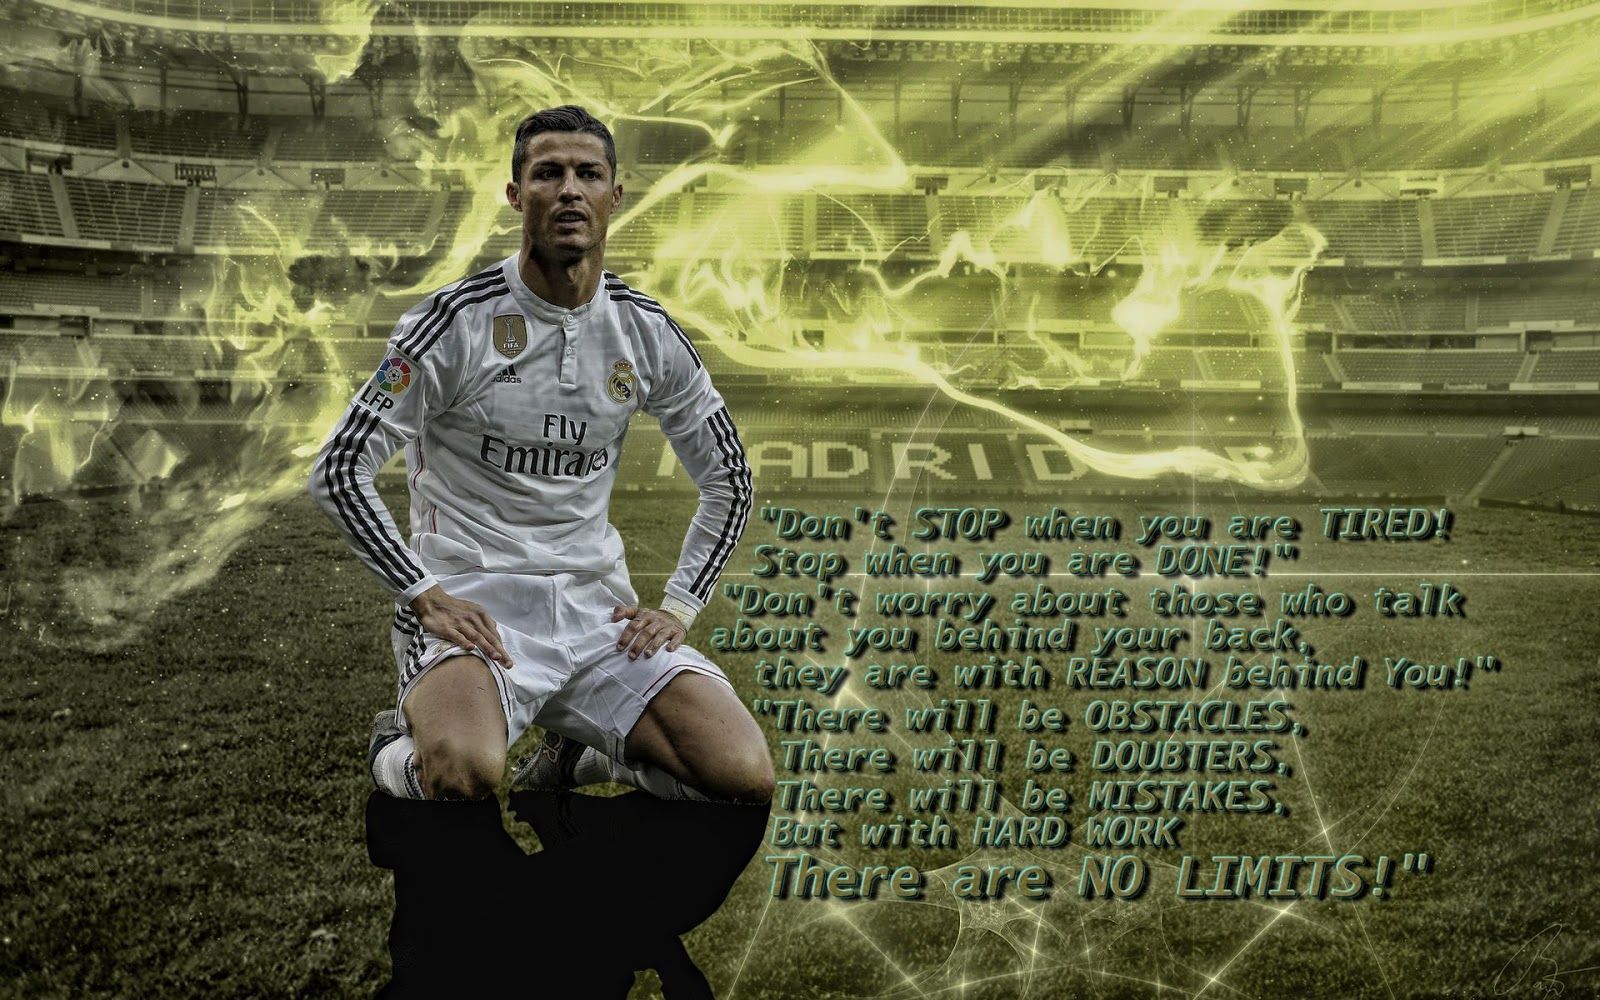 Cristiano Ronaldo HD Wallpapers #2 - Catatan Madridista